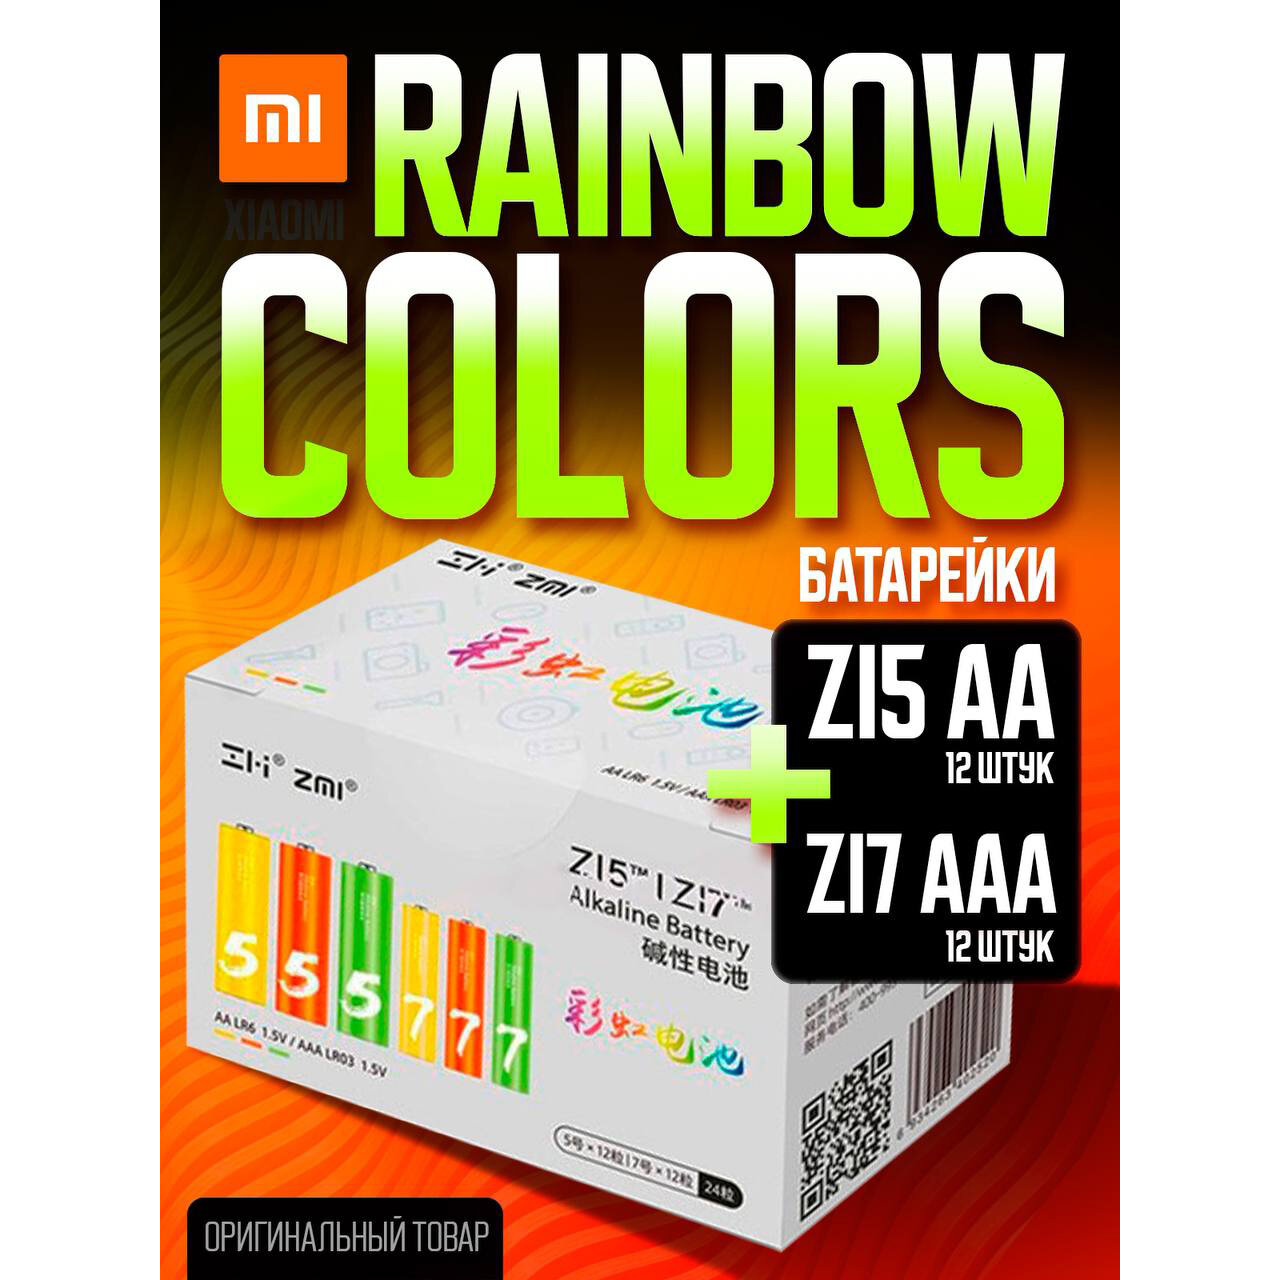 Батарейки алкалиновые Xiaomi ZMI Rainbow Z15AA/Z17AAA (12+12 шт.) цветные